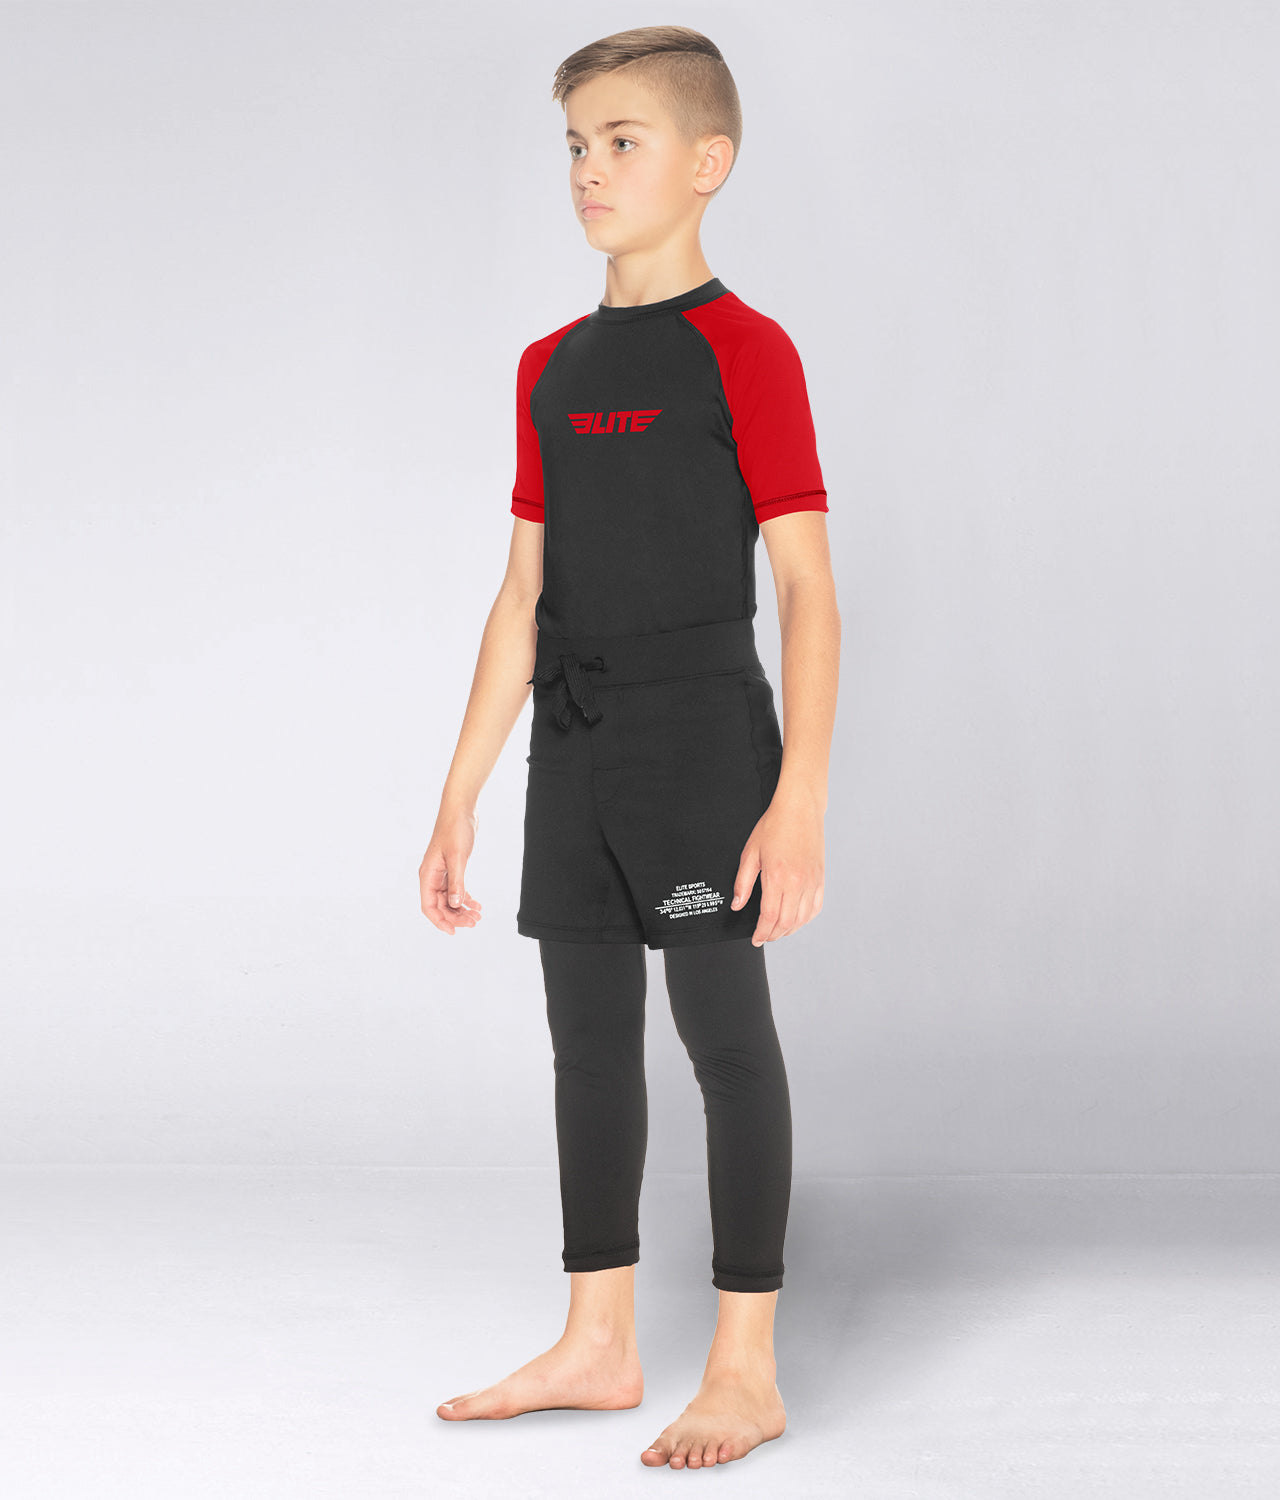 Elite Sports Kids' Standard Red Short Sleeve Training Rash Guard